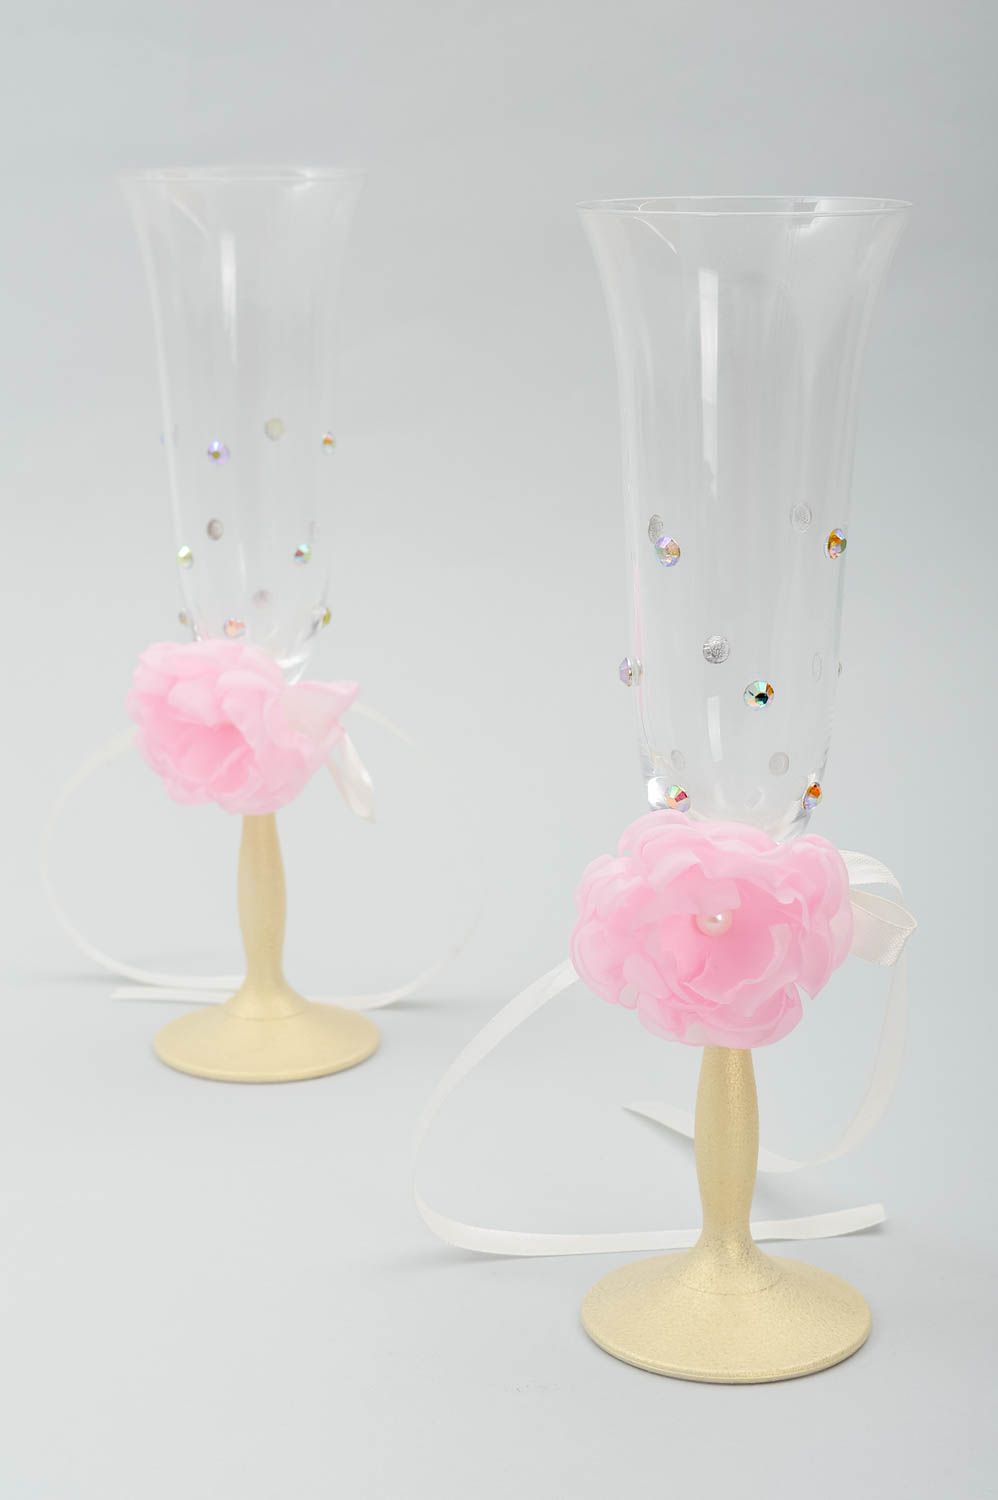 Handmade glasses designer glasses wedding champagne glasses gift ideas photo 2